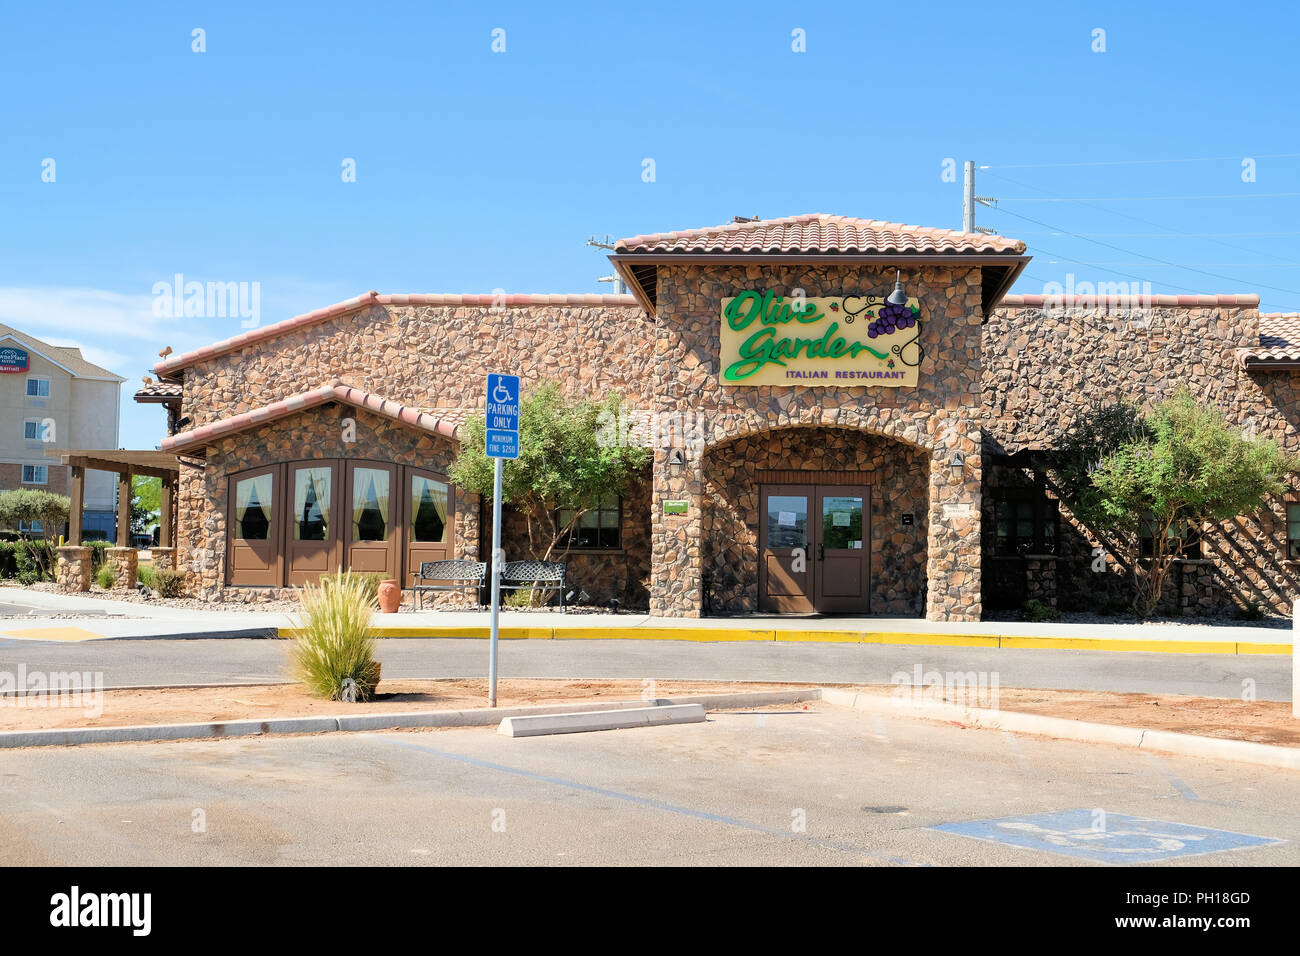 Olive Garden Italian Restaurant Storefront Stock Photo 217002253